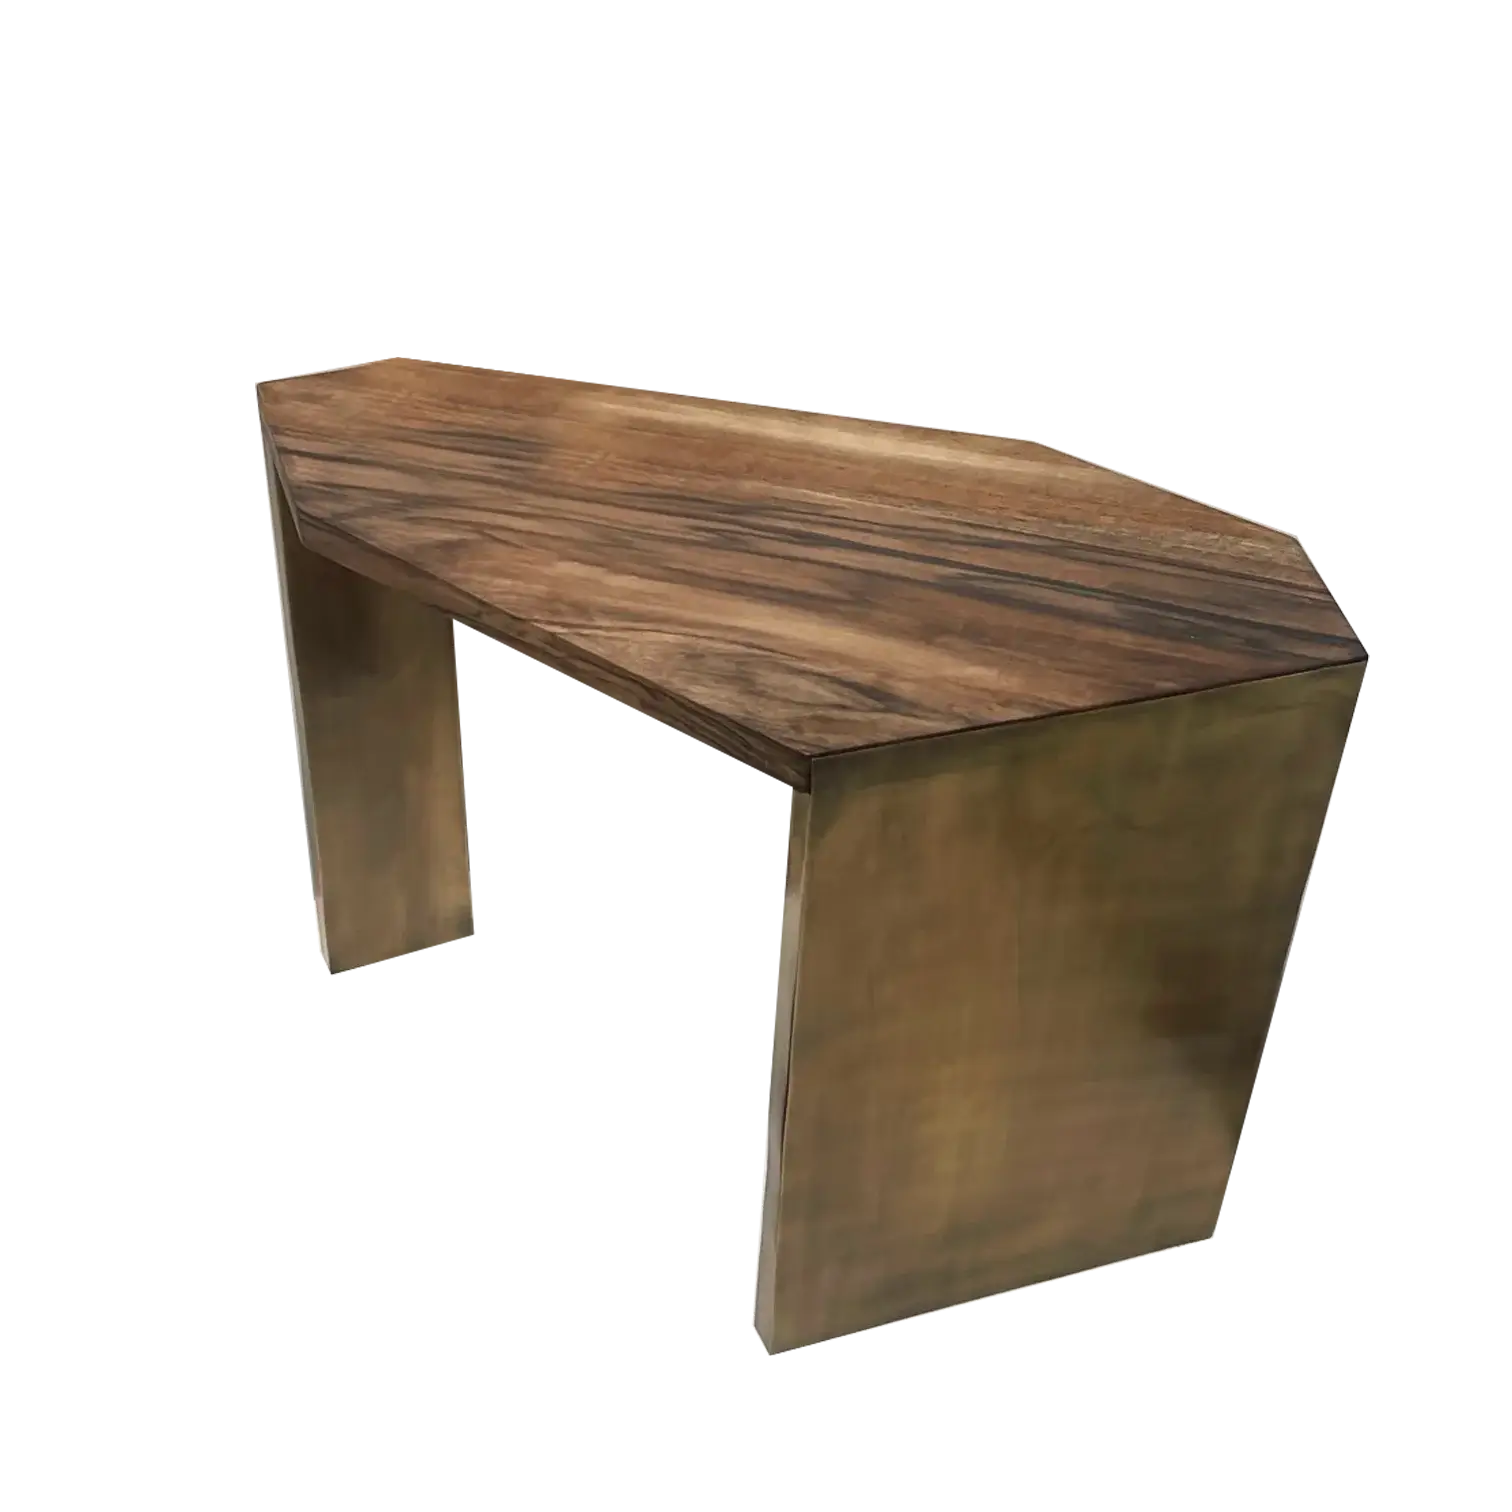 Dounia home Coffe table in Matte gun mrtal  made of Walnut oak or cedar and brass, Model: Toubkal